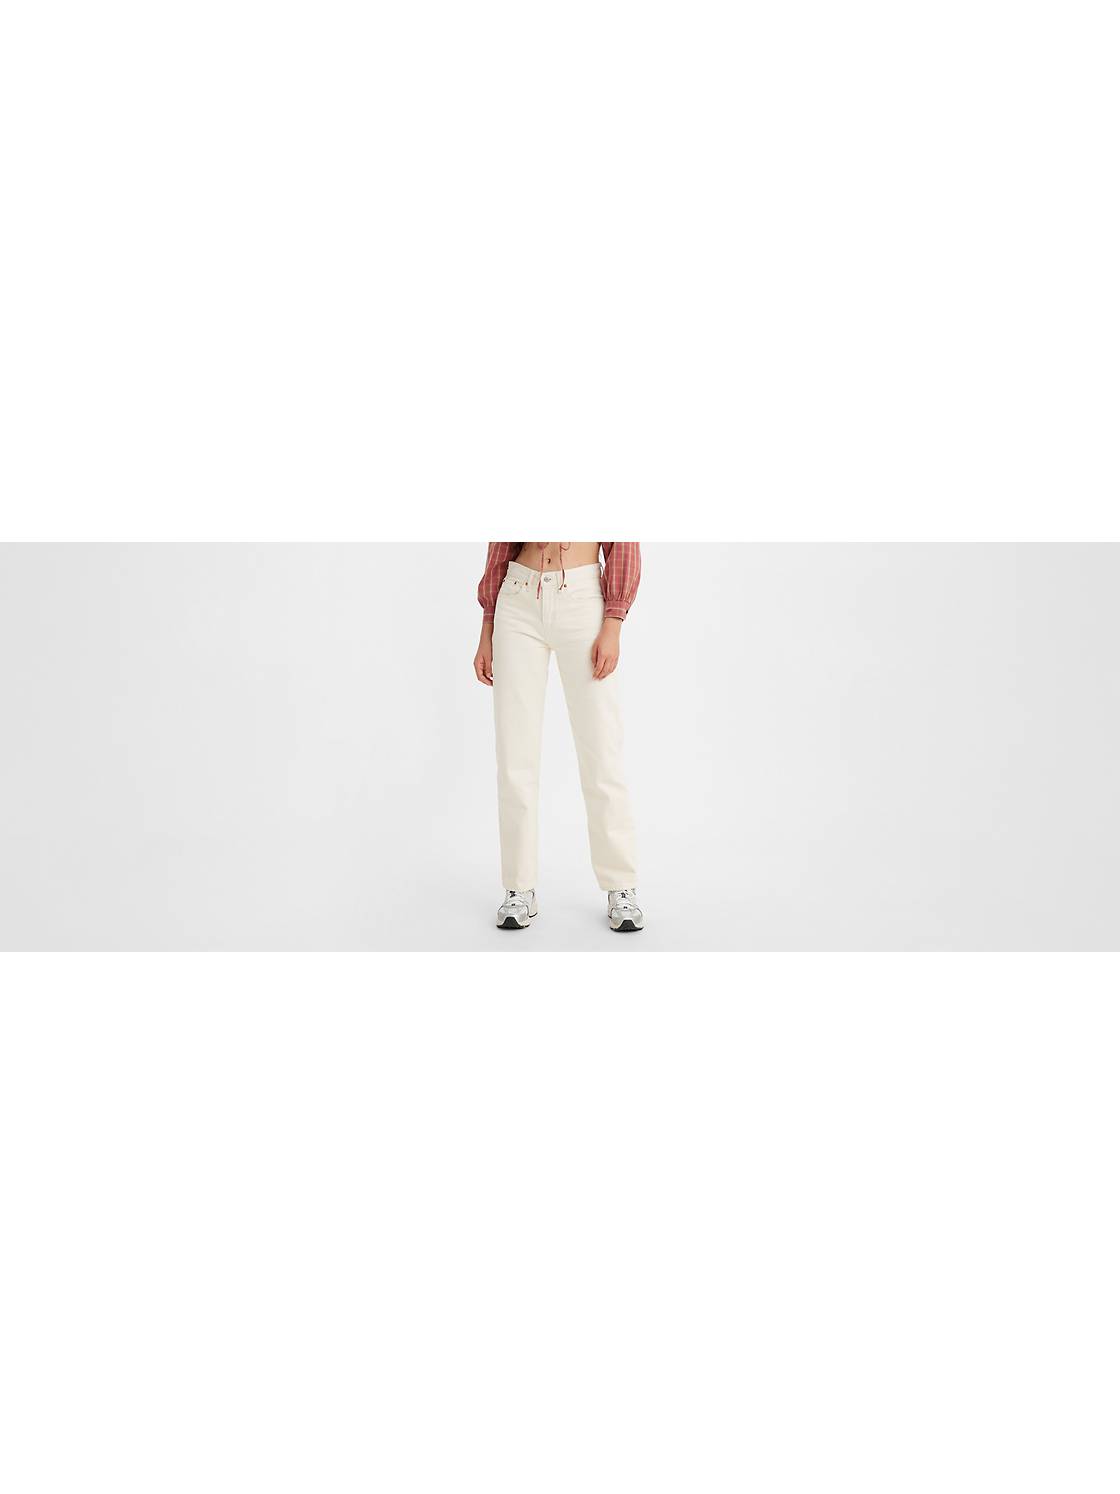 Poleret Vild Sweeten Women's White Jeans | Levi's® US